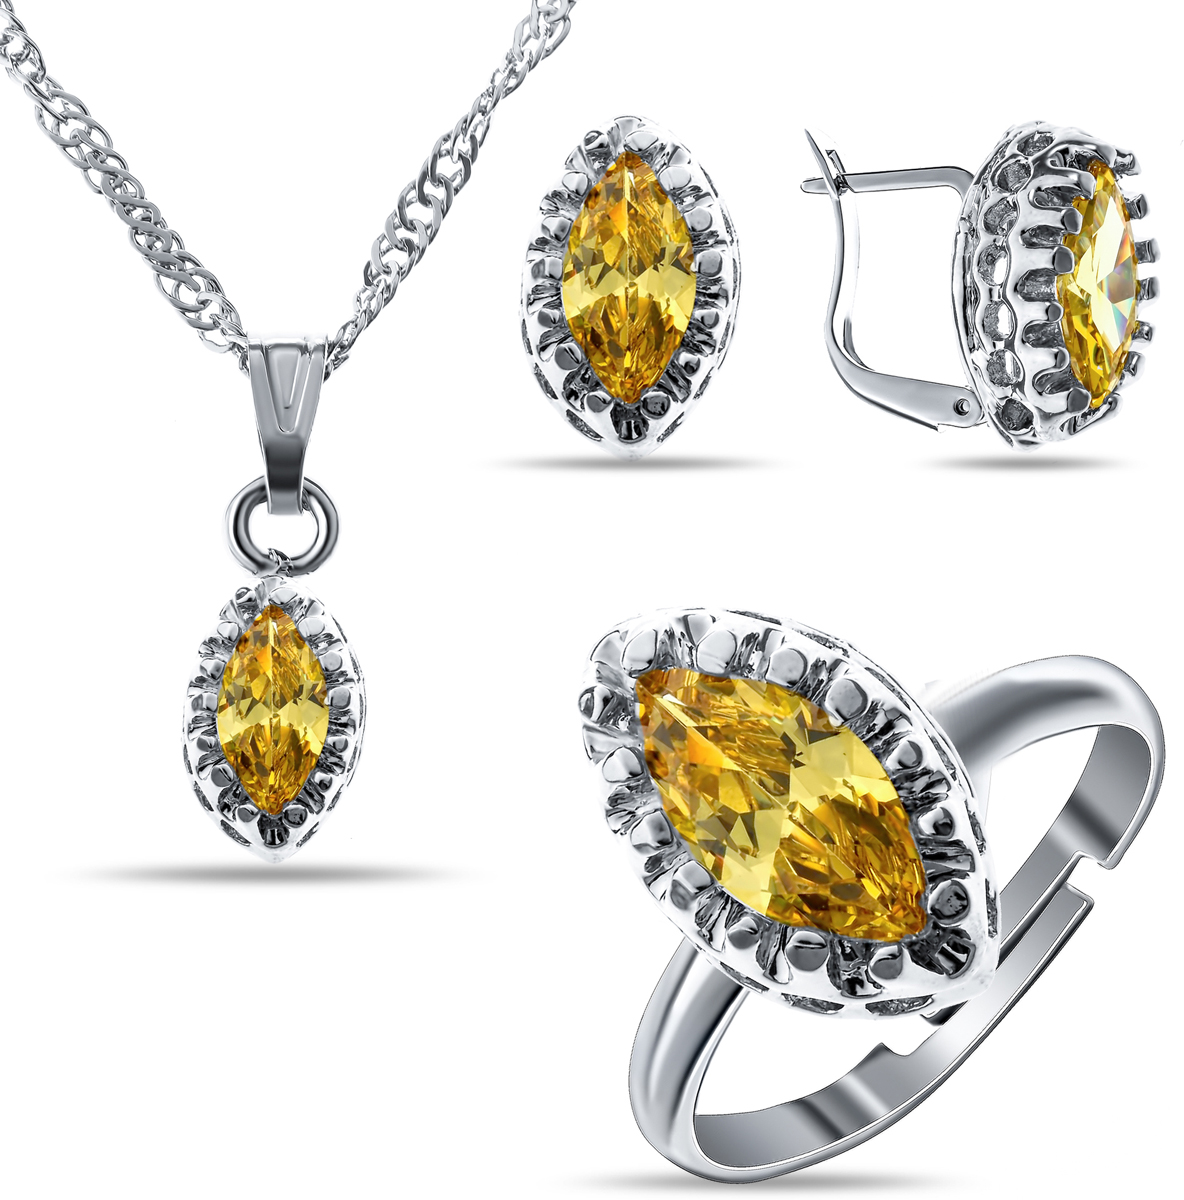 Комплект украшений Teosa: колье, серьги, кольцо, цвет: желтый, серебристый. T-SET-132